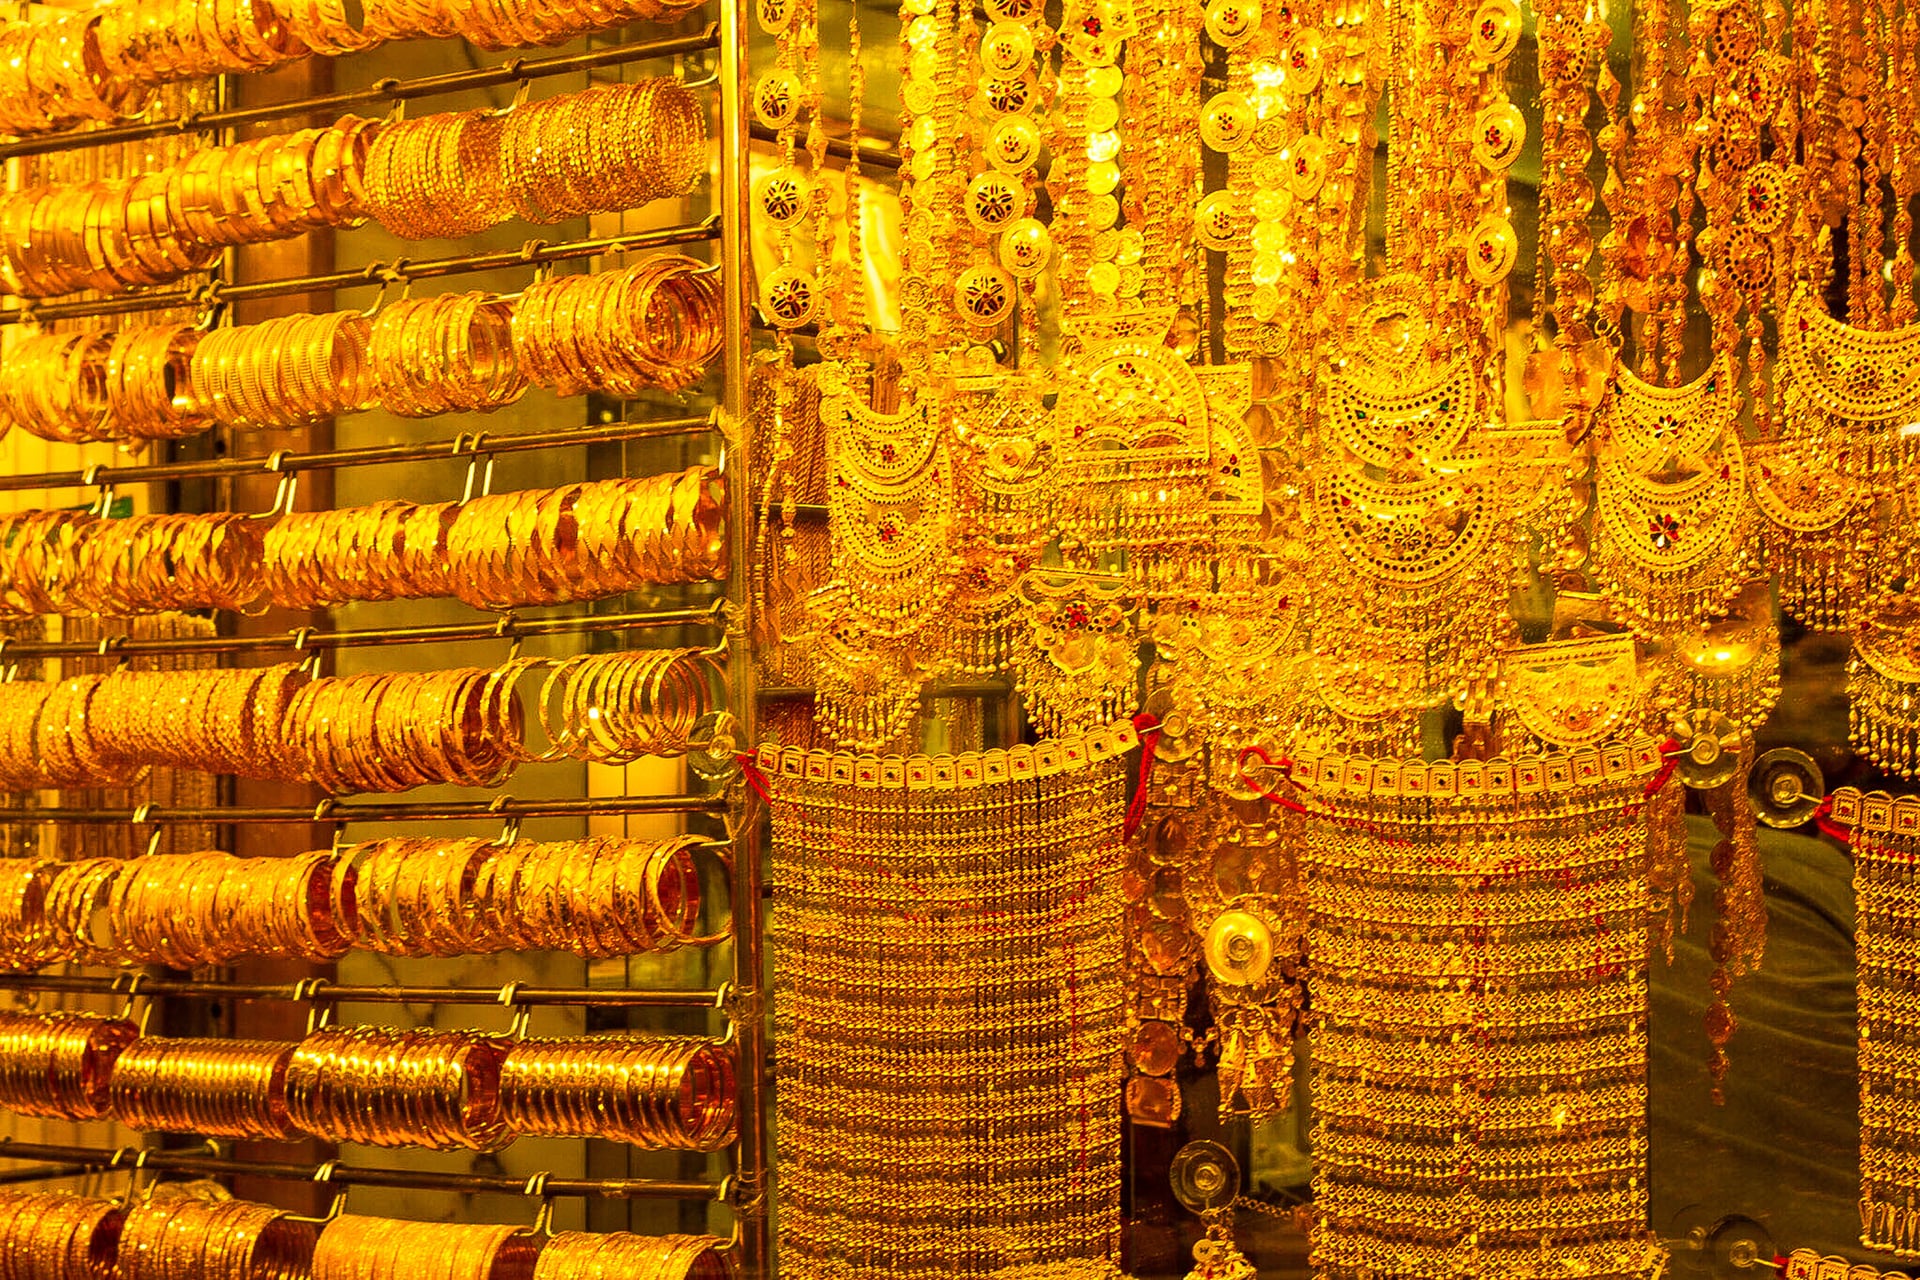 Dubai's Gold Souk: A Glimpse into the City of Gold